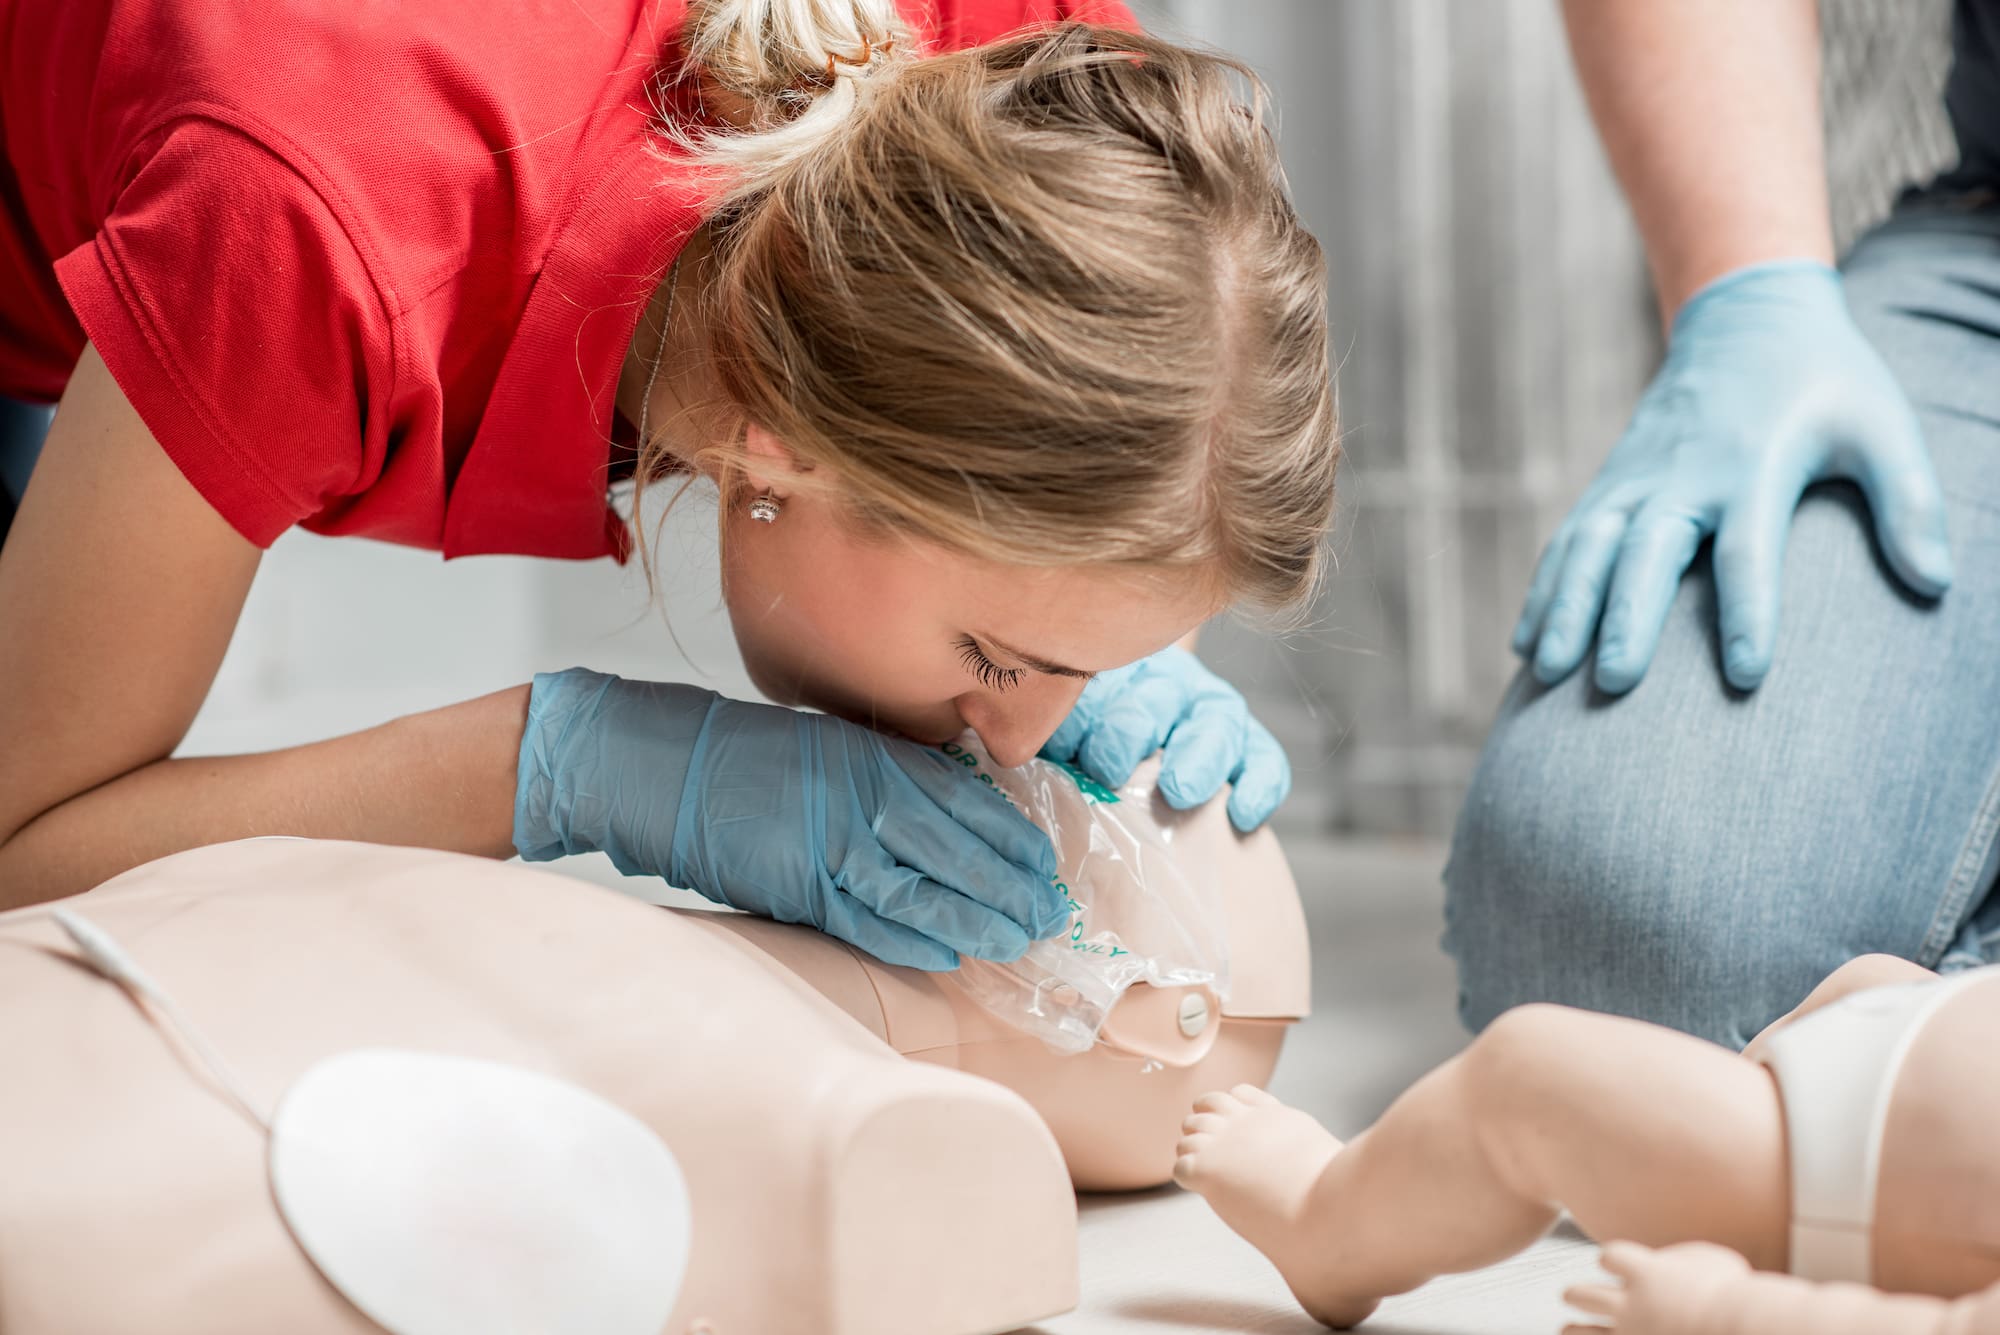 4 First Aid Steps Towards Emergency Preparedness